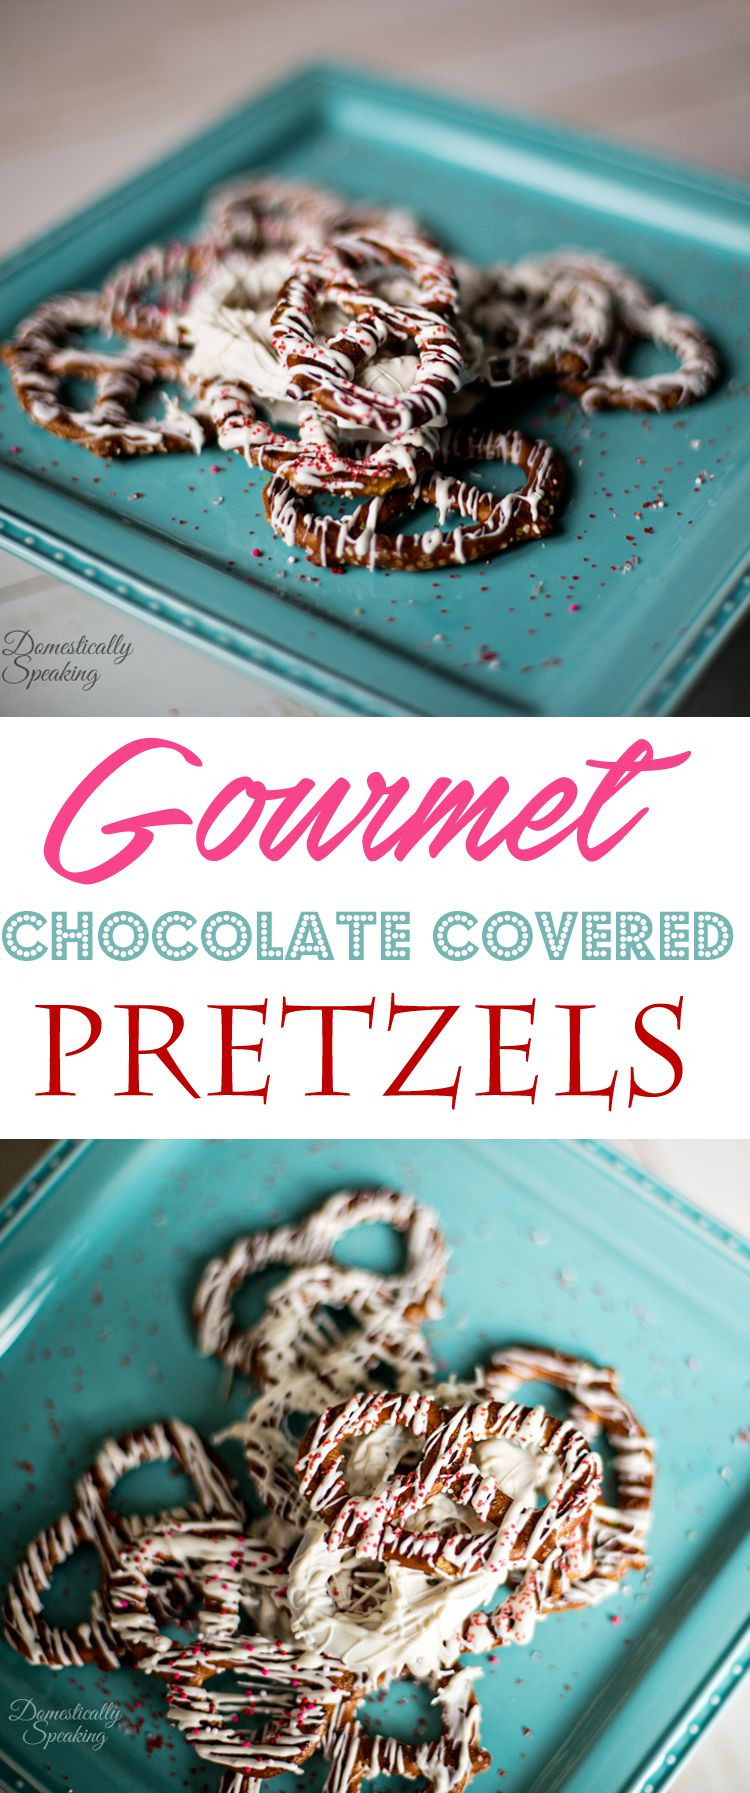 Gourmet Chocolate Covered Pretzels Recipe
 Gourmet Chocolate Covered Pretzels